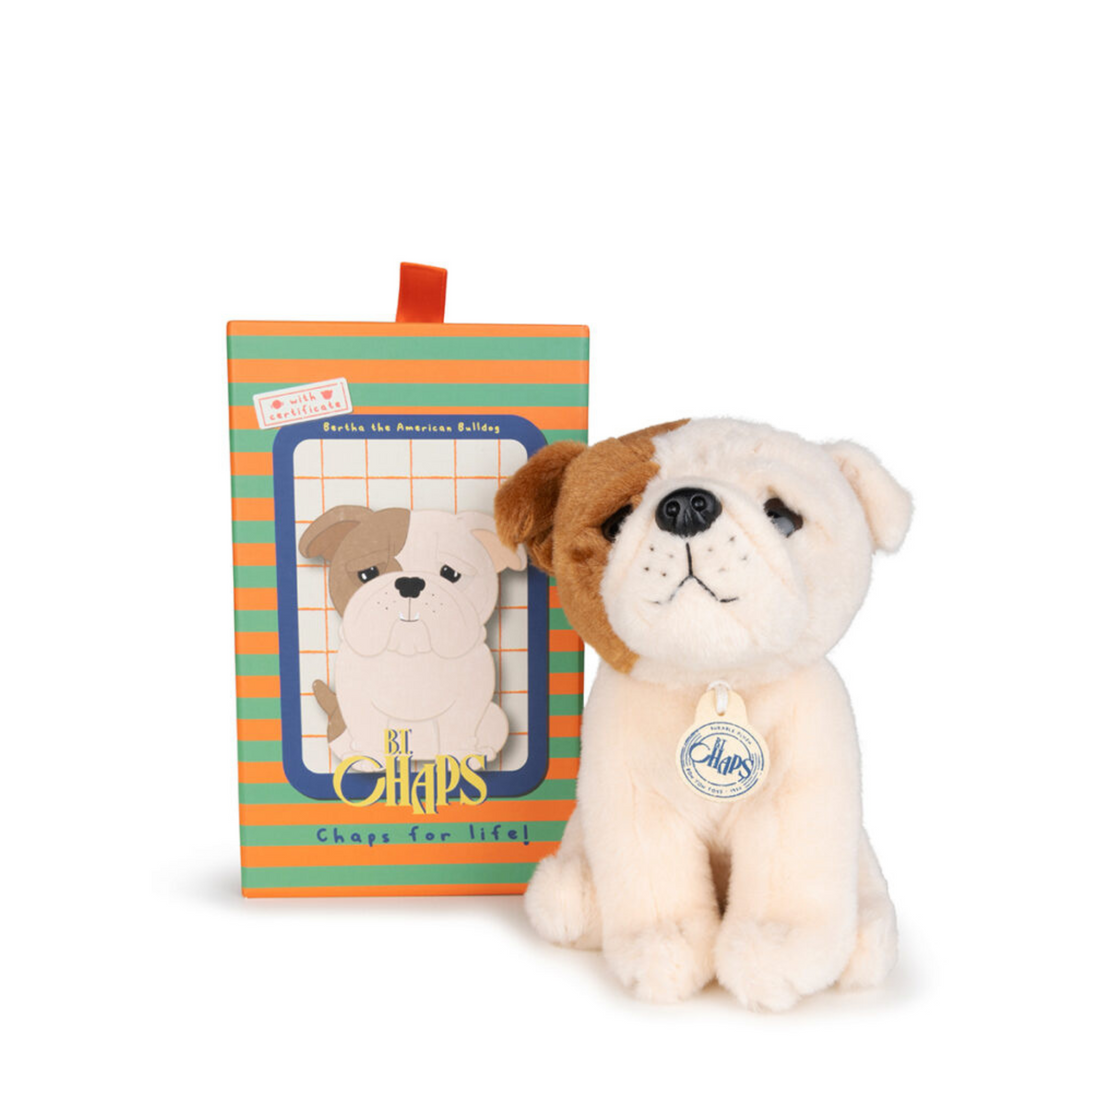 Puppy Bertha in a gift box